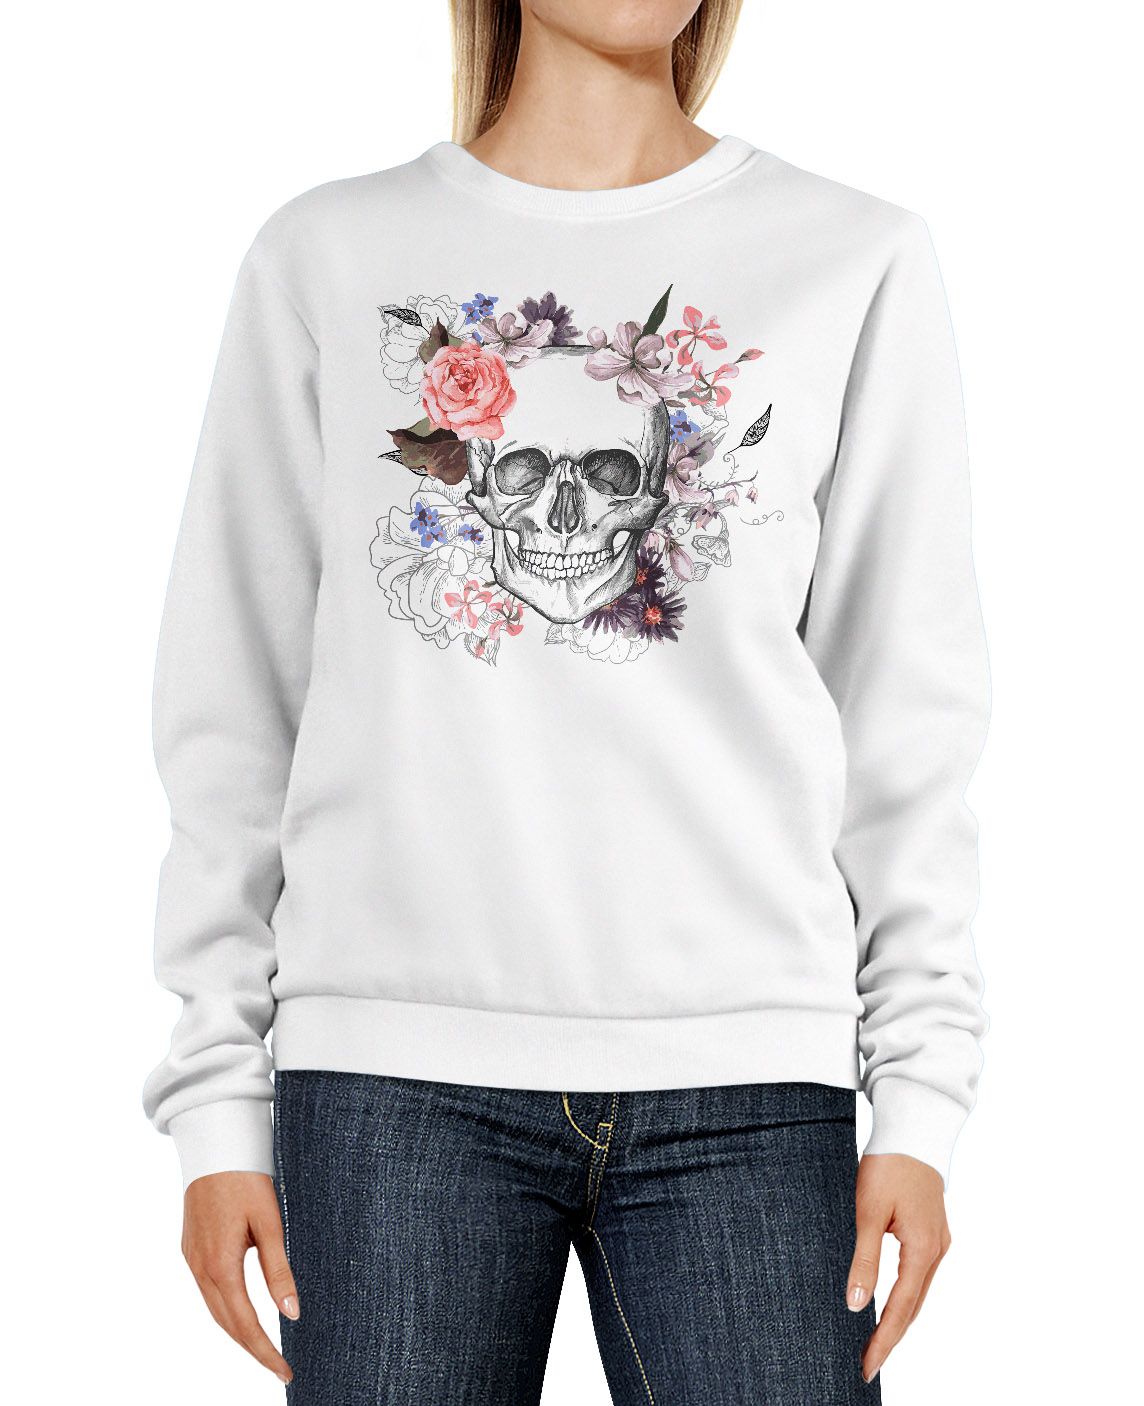 Sweatshirt Damen Totenkopf Blumen Boho Design Print Flower Skull